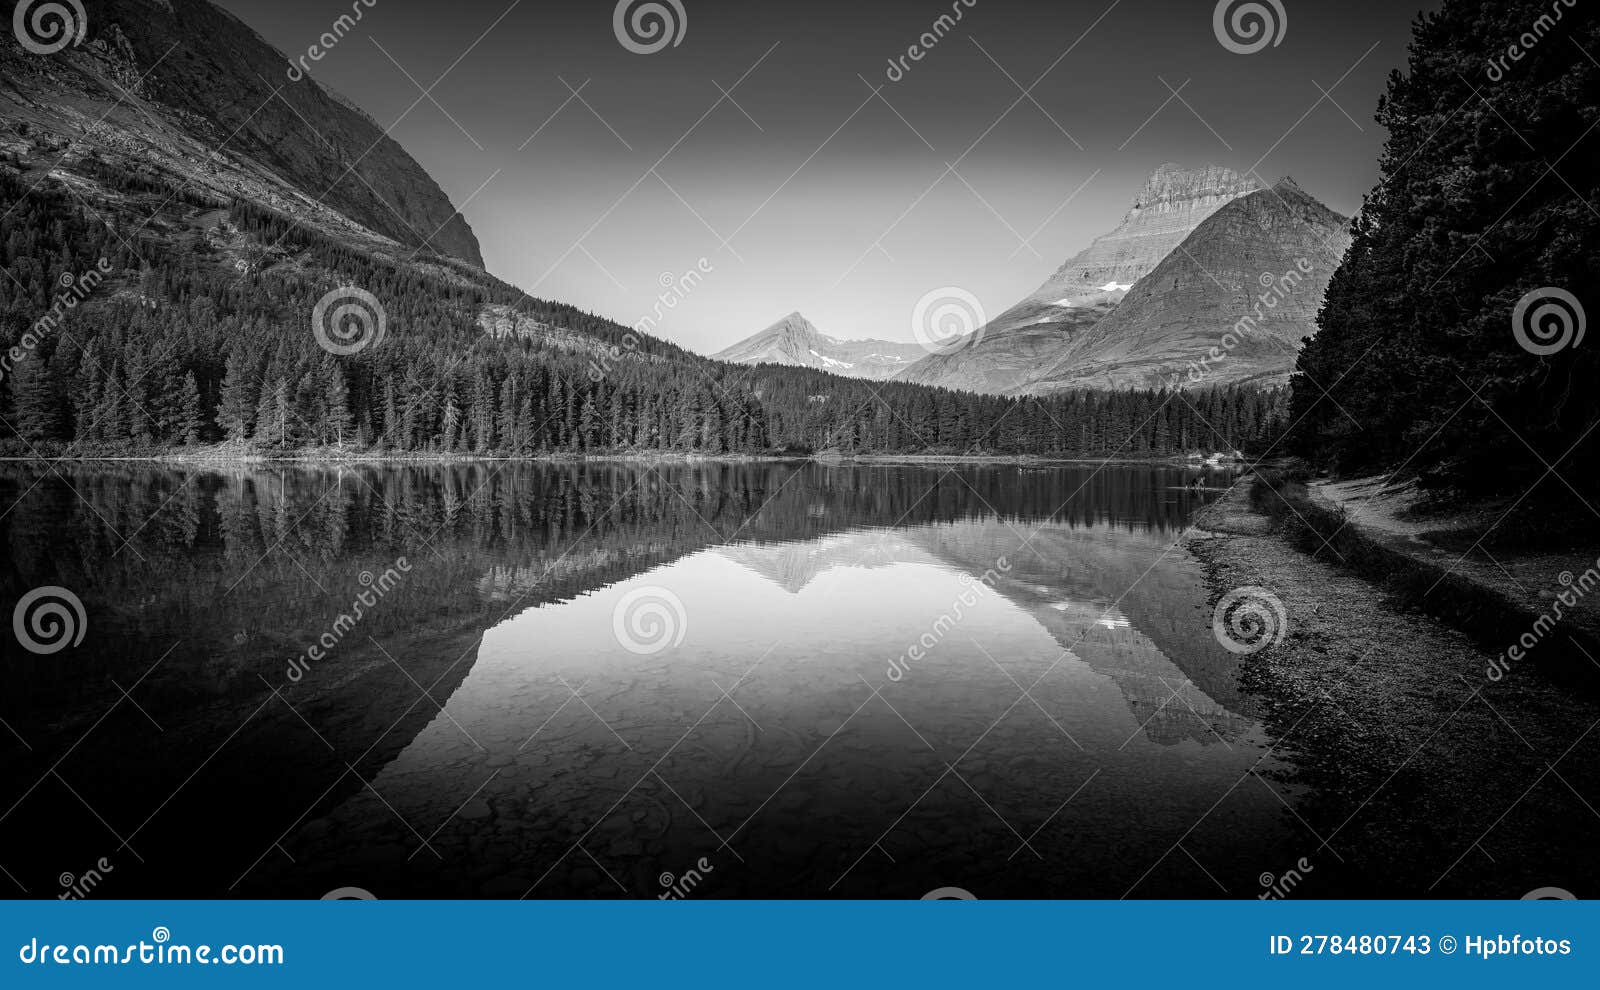 black and white landscape photo of mt. wilbur reflection in fishercap lake at sunrise in glacier national park